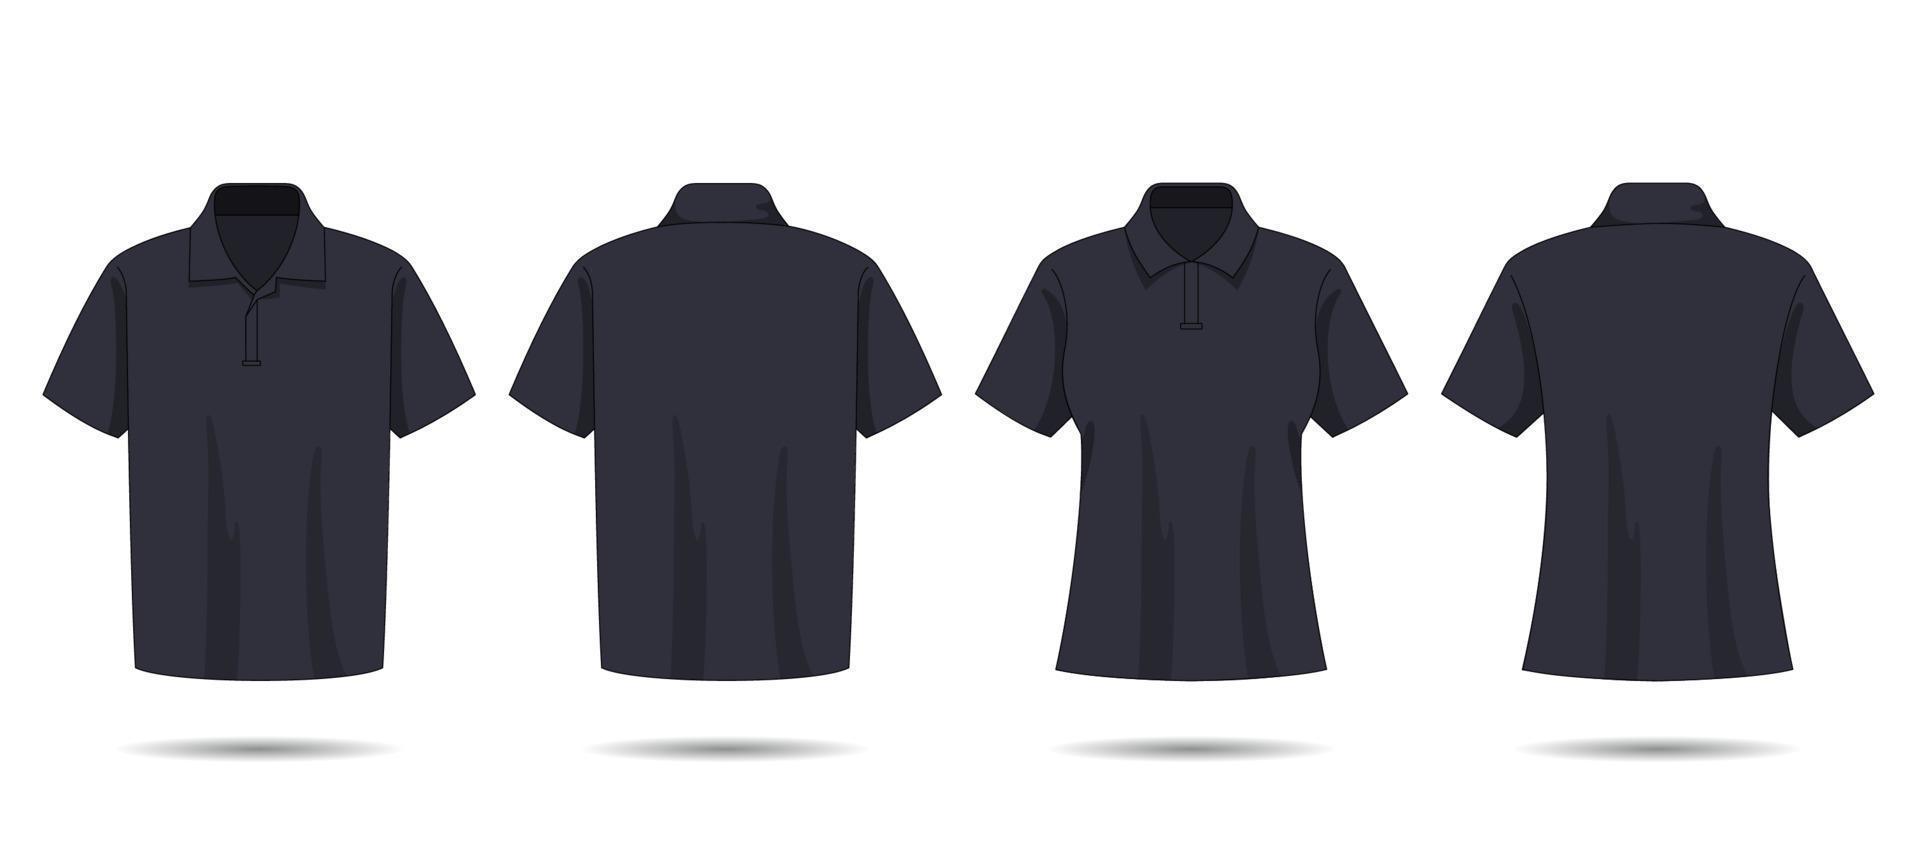 schwarz Polo Hemd Attrappe, Lehrmodell, Simulation vektor